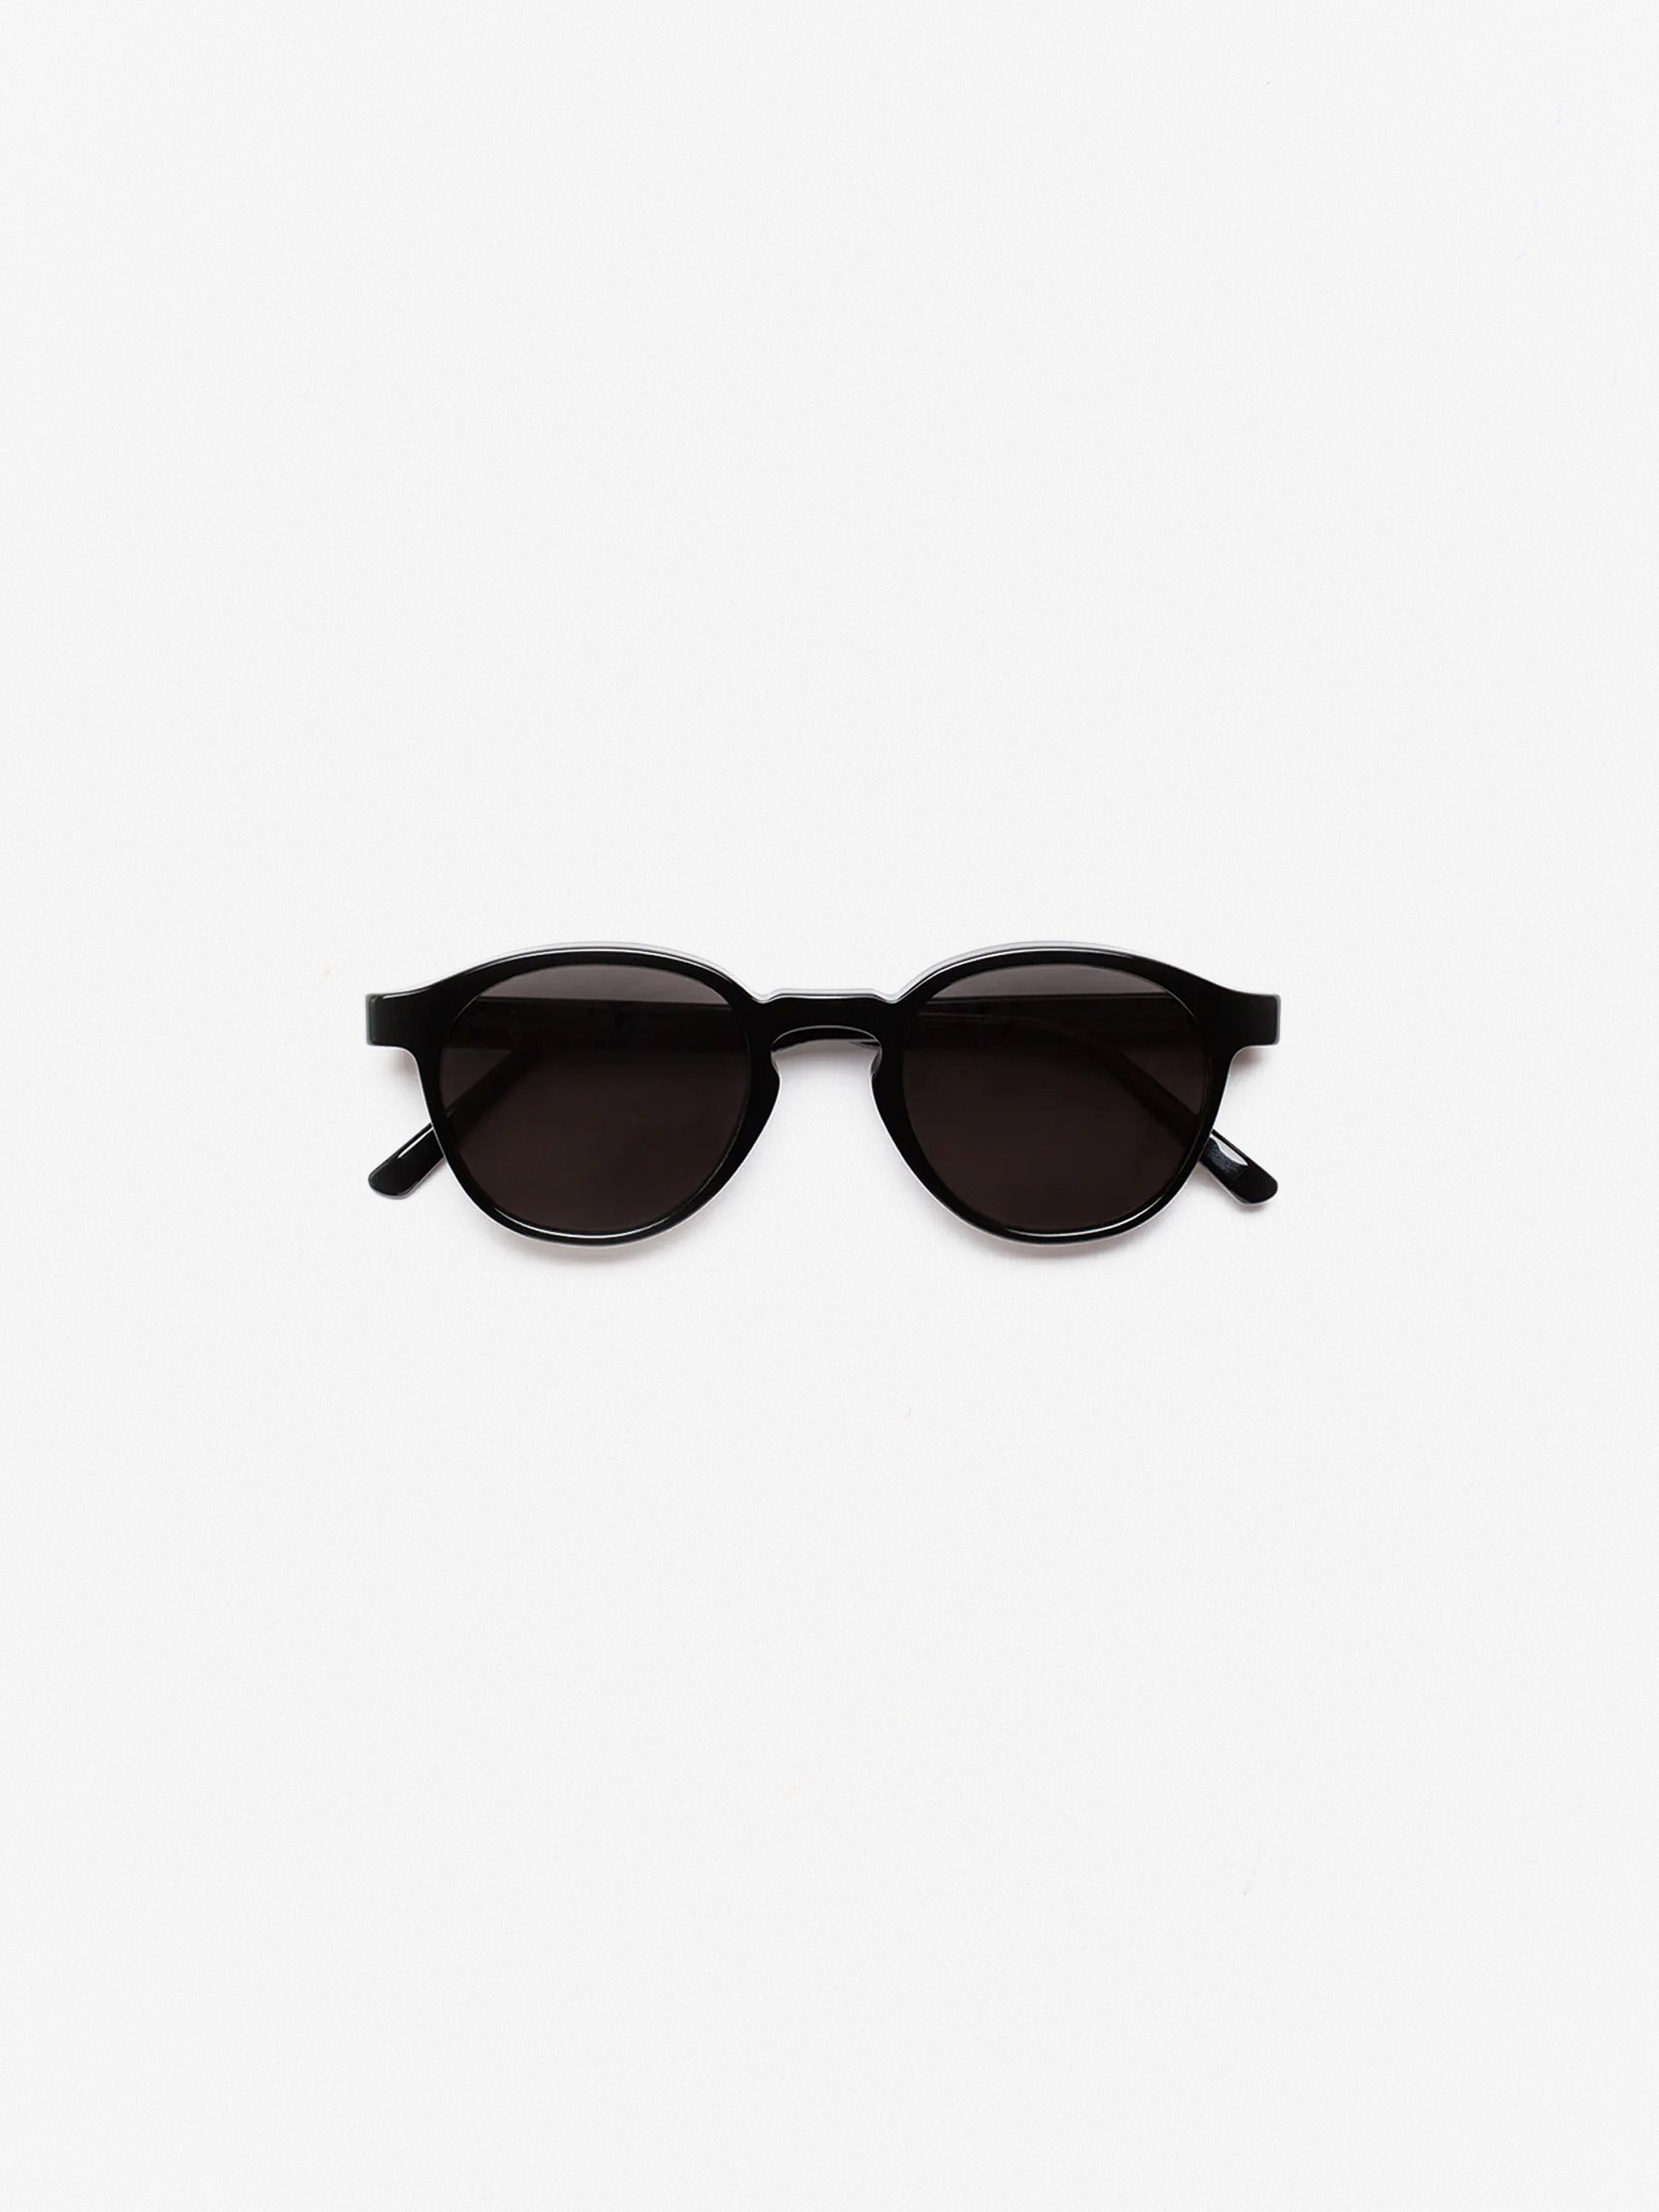 The Warhol Sunglasses Black